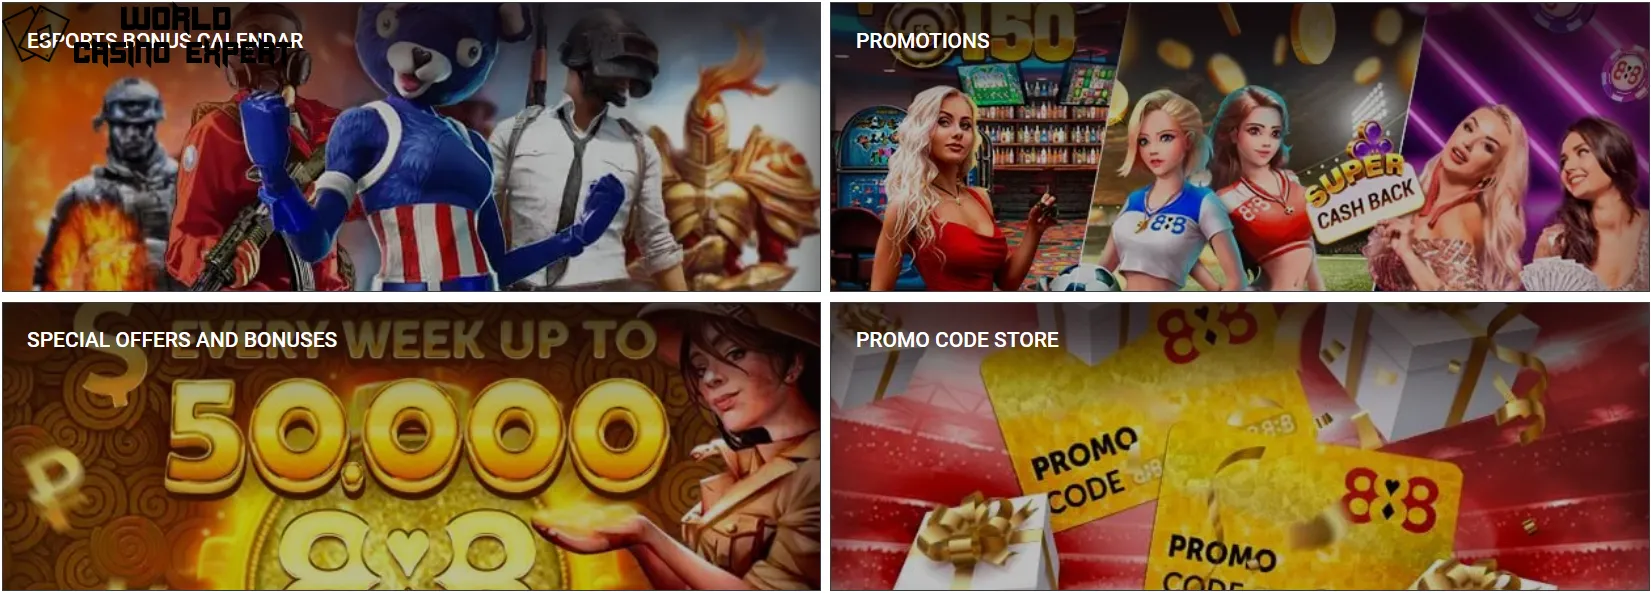 Bonuses and promotions at 888STARZ Online Casino | World Casino Expert